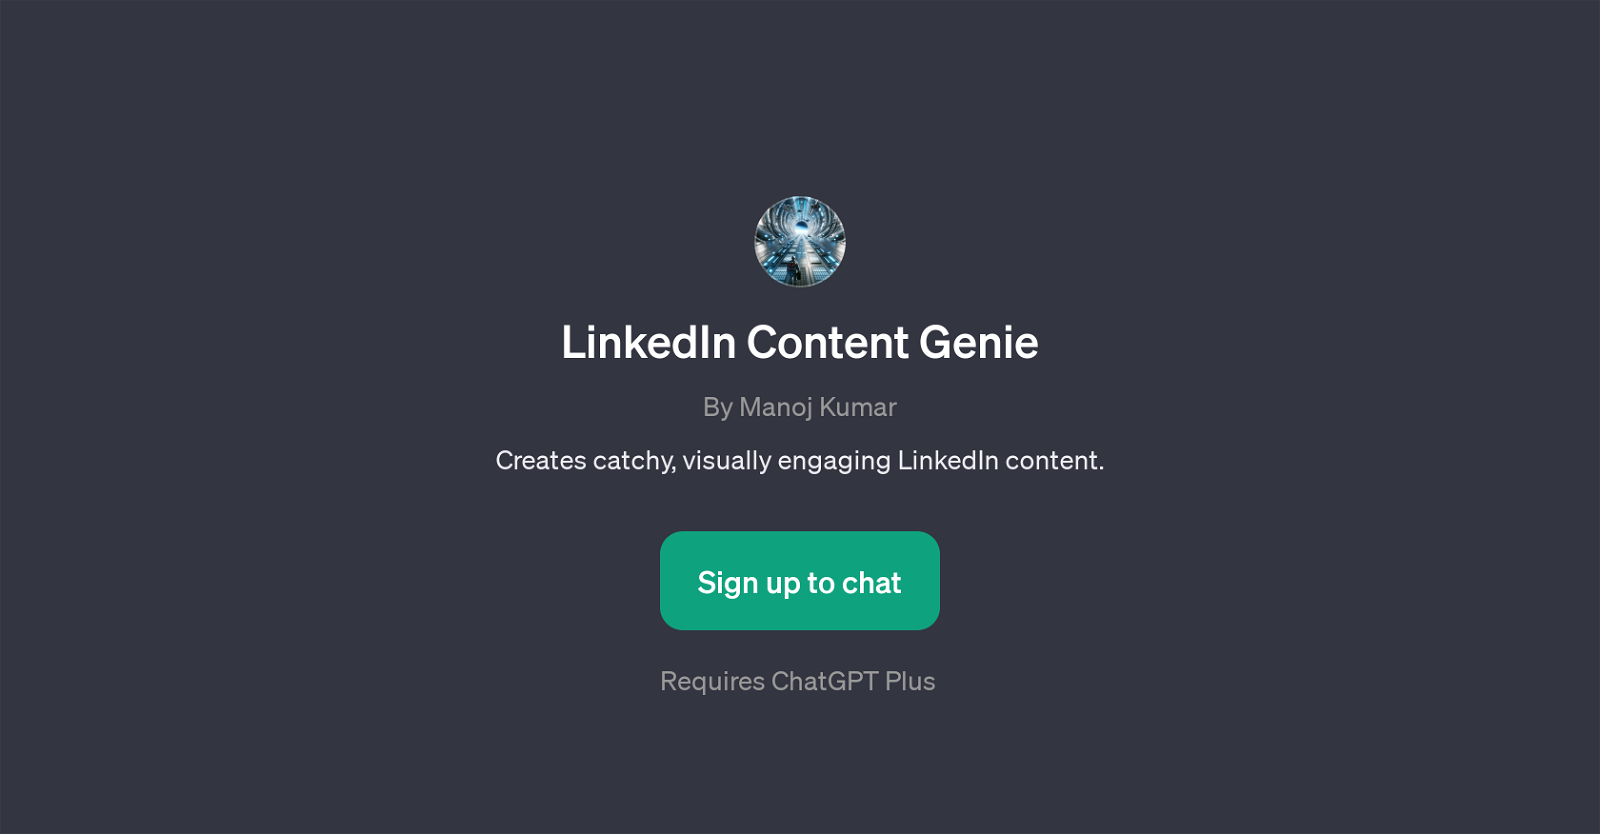 LinkedIn Content Genie website